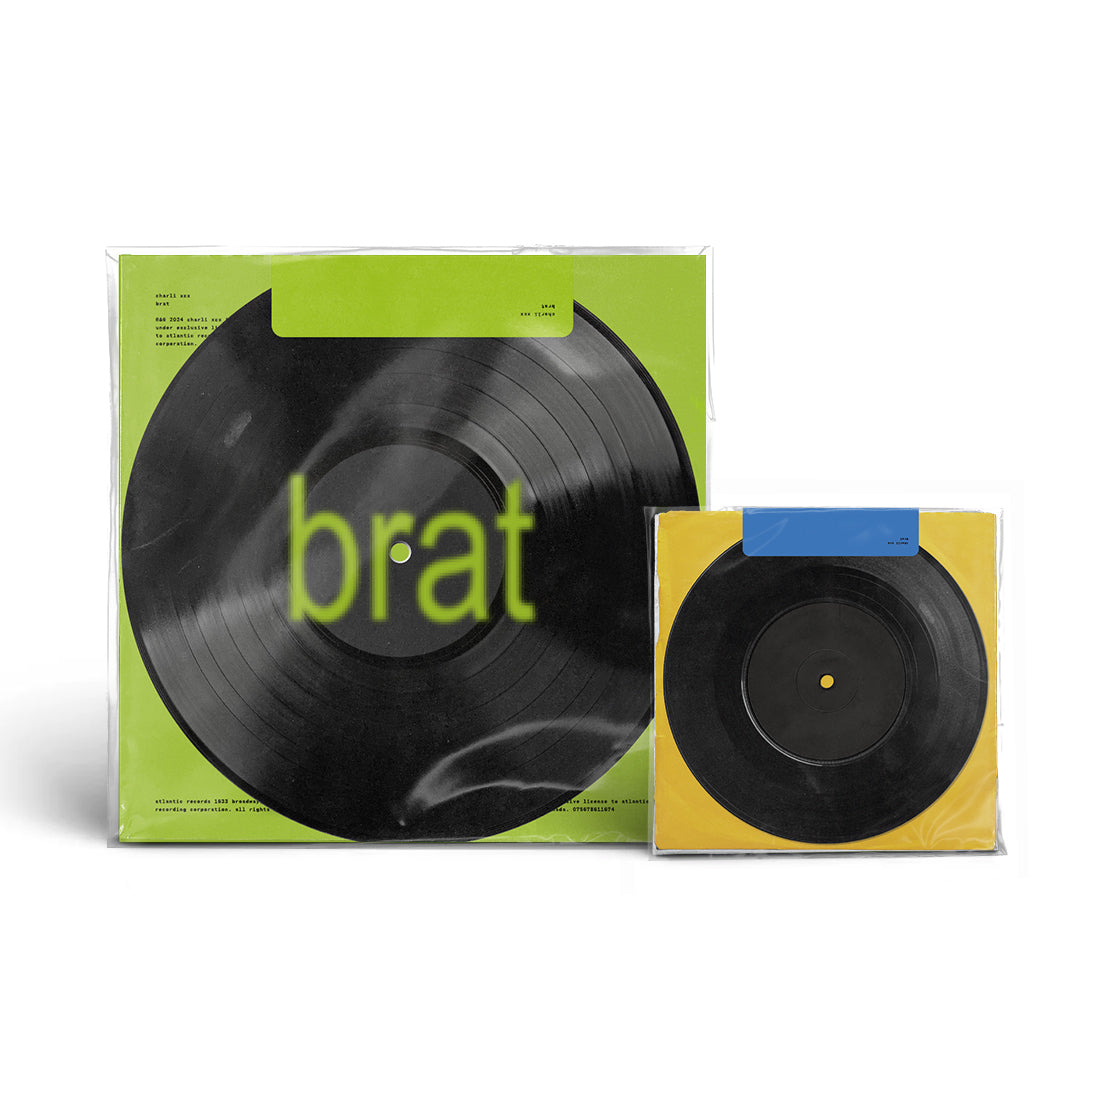 BRAT (includes the Club classics / B2b 7” vinyl)